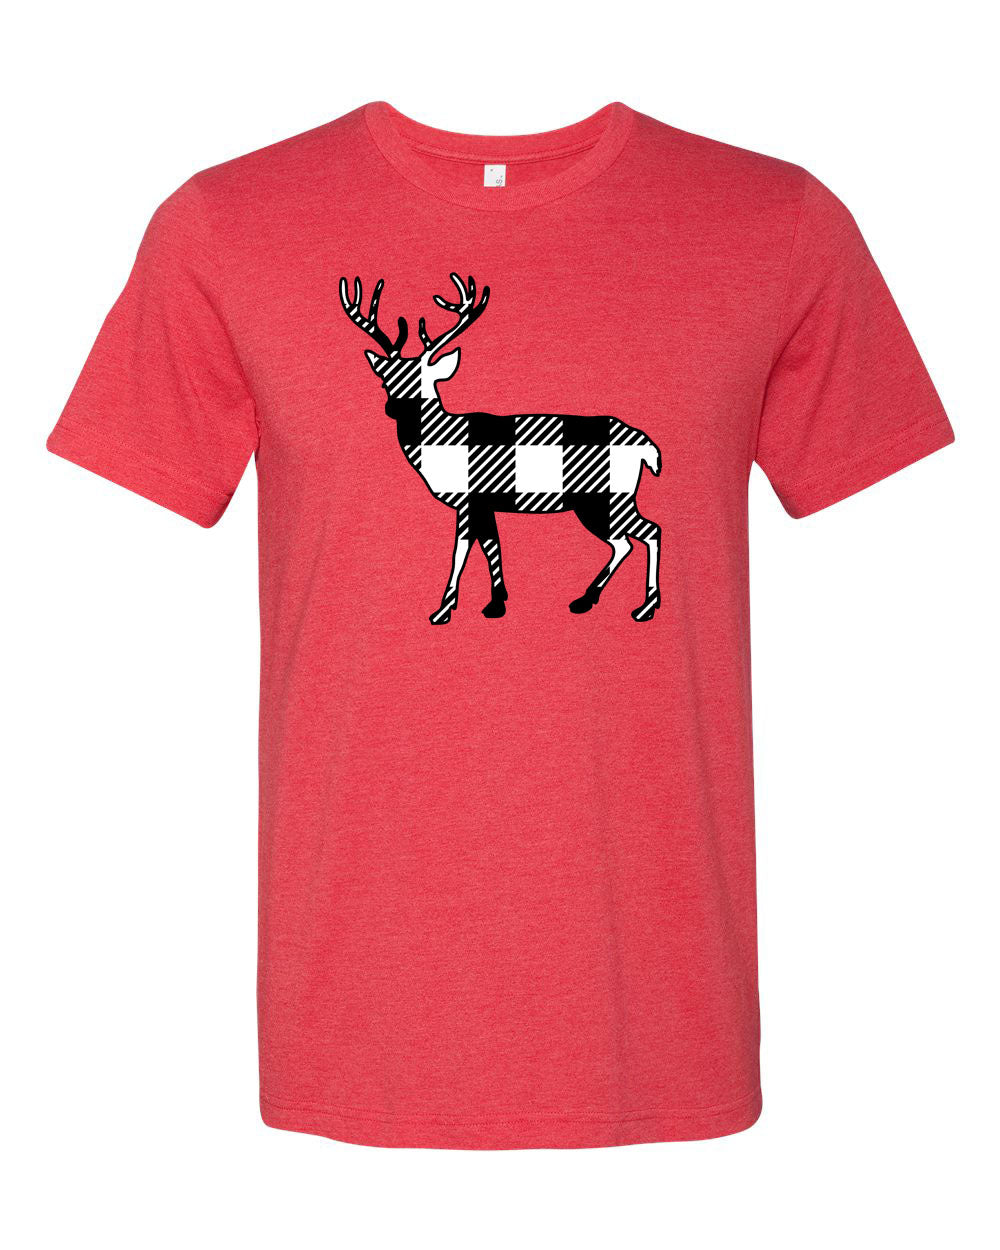 Plaid Deer T-Shirt